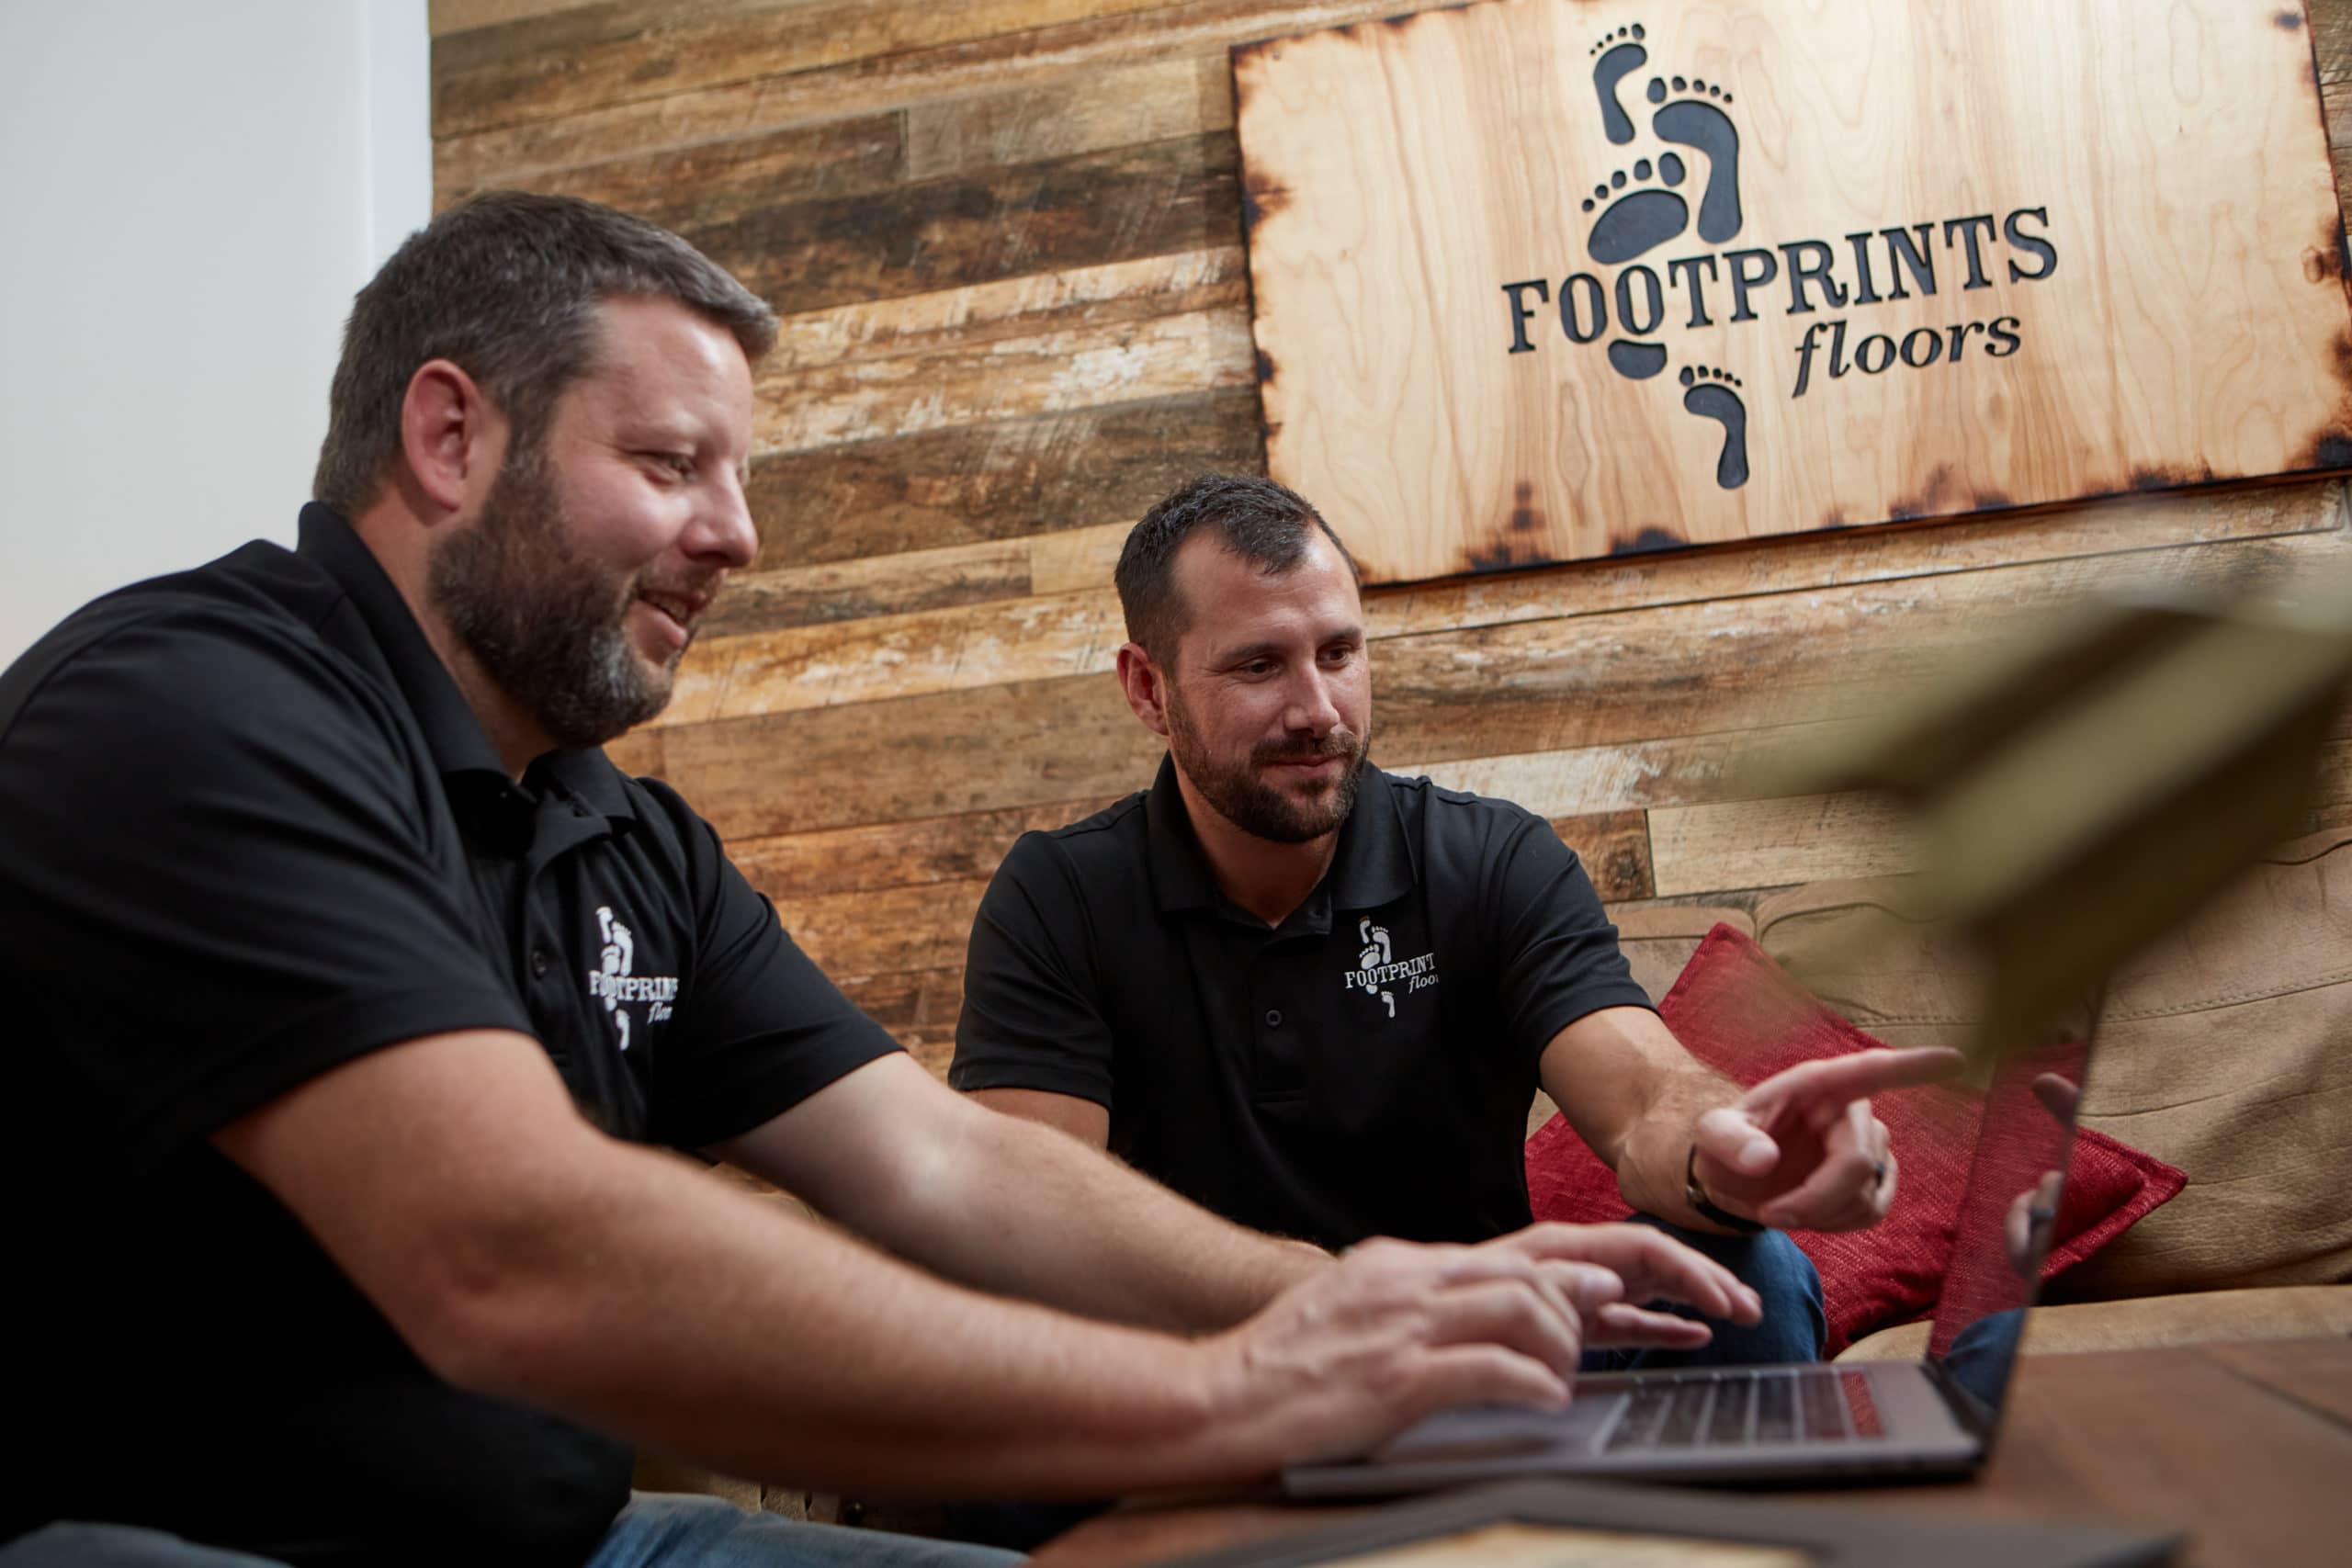 Footprints Floors floor franchise owner training.